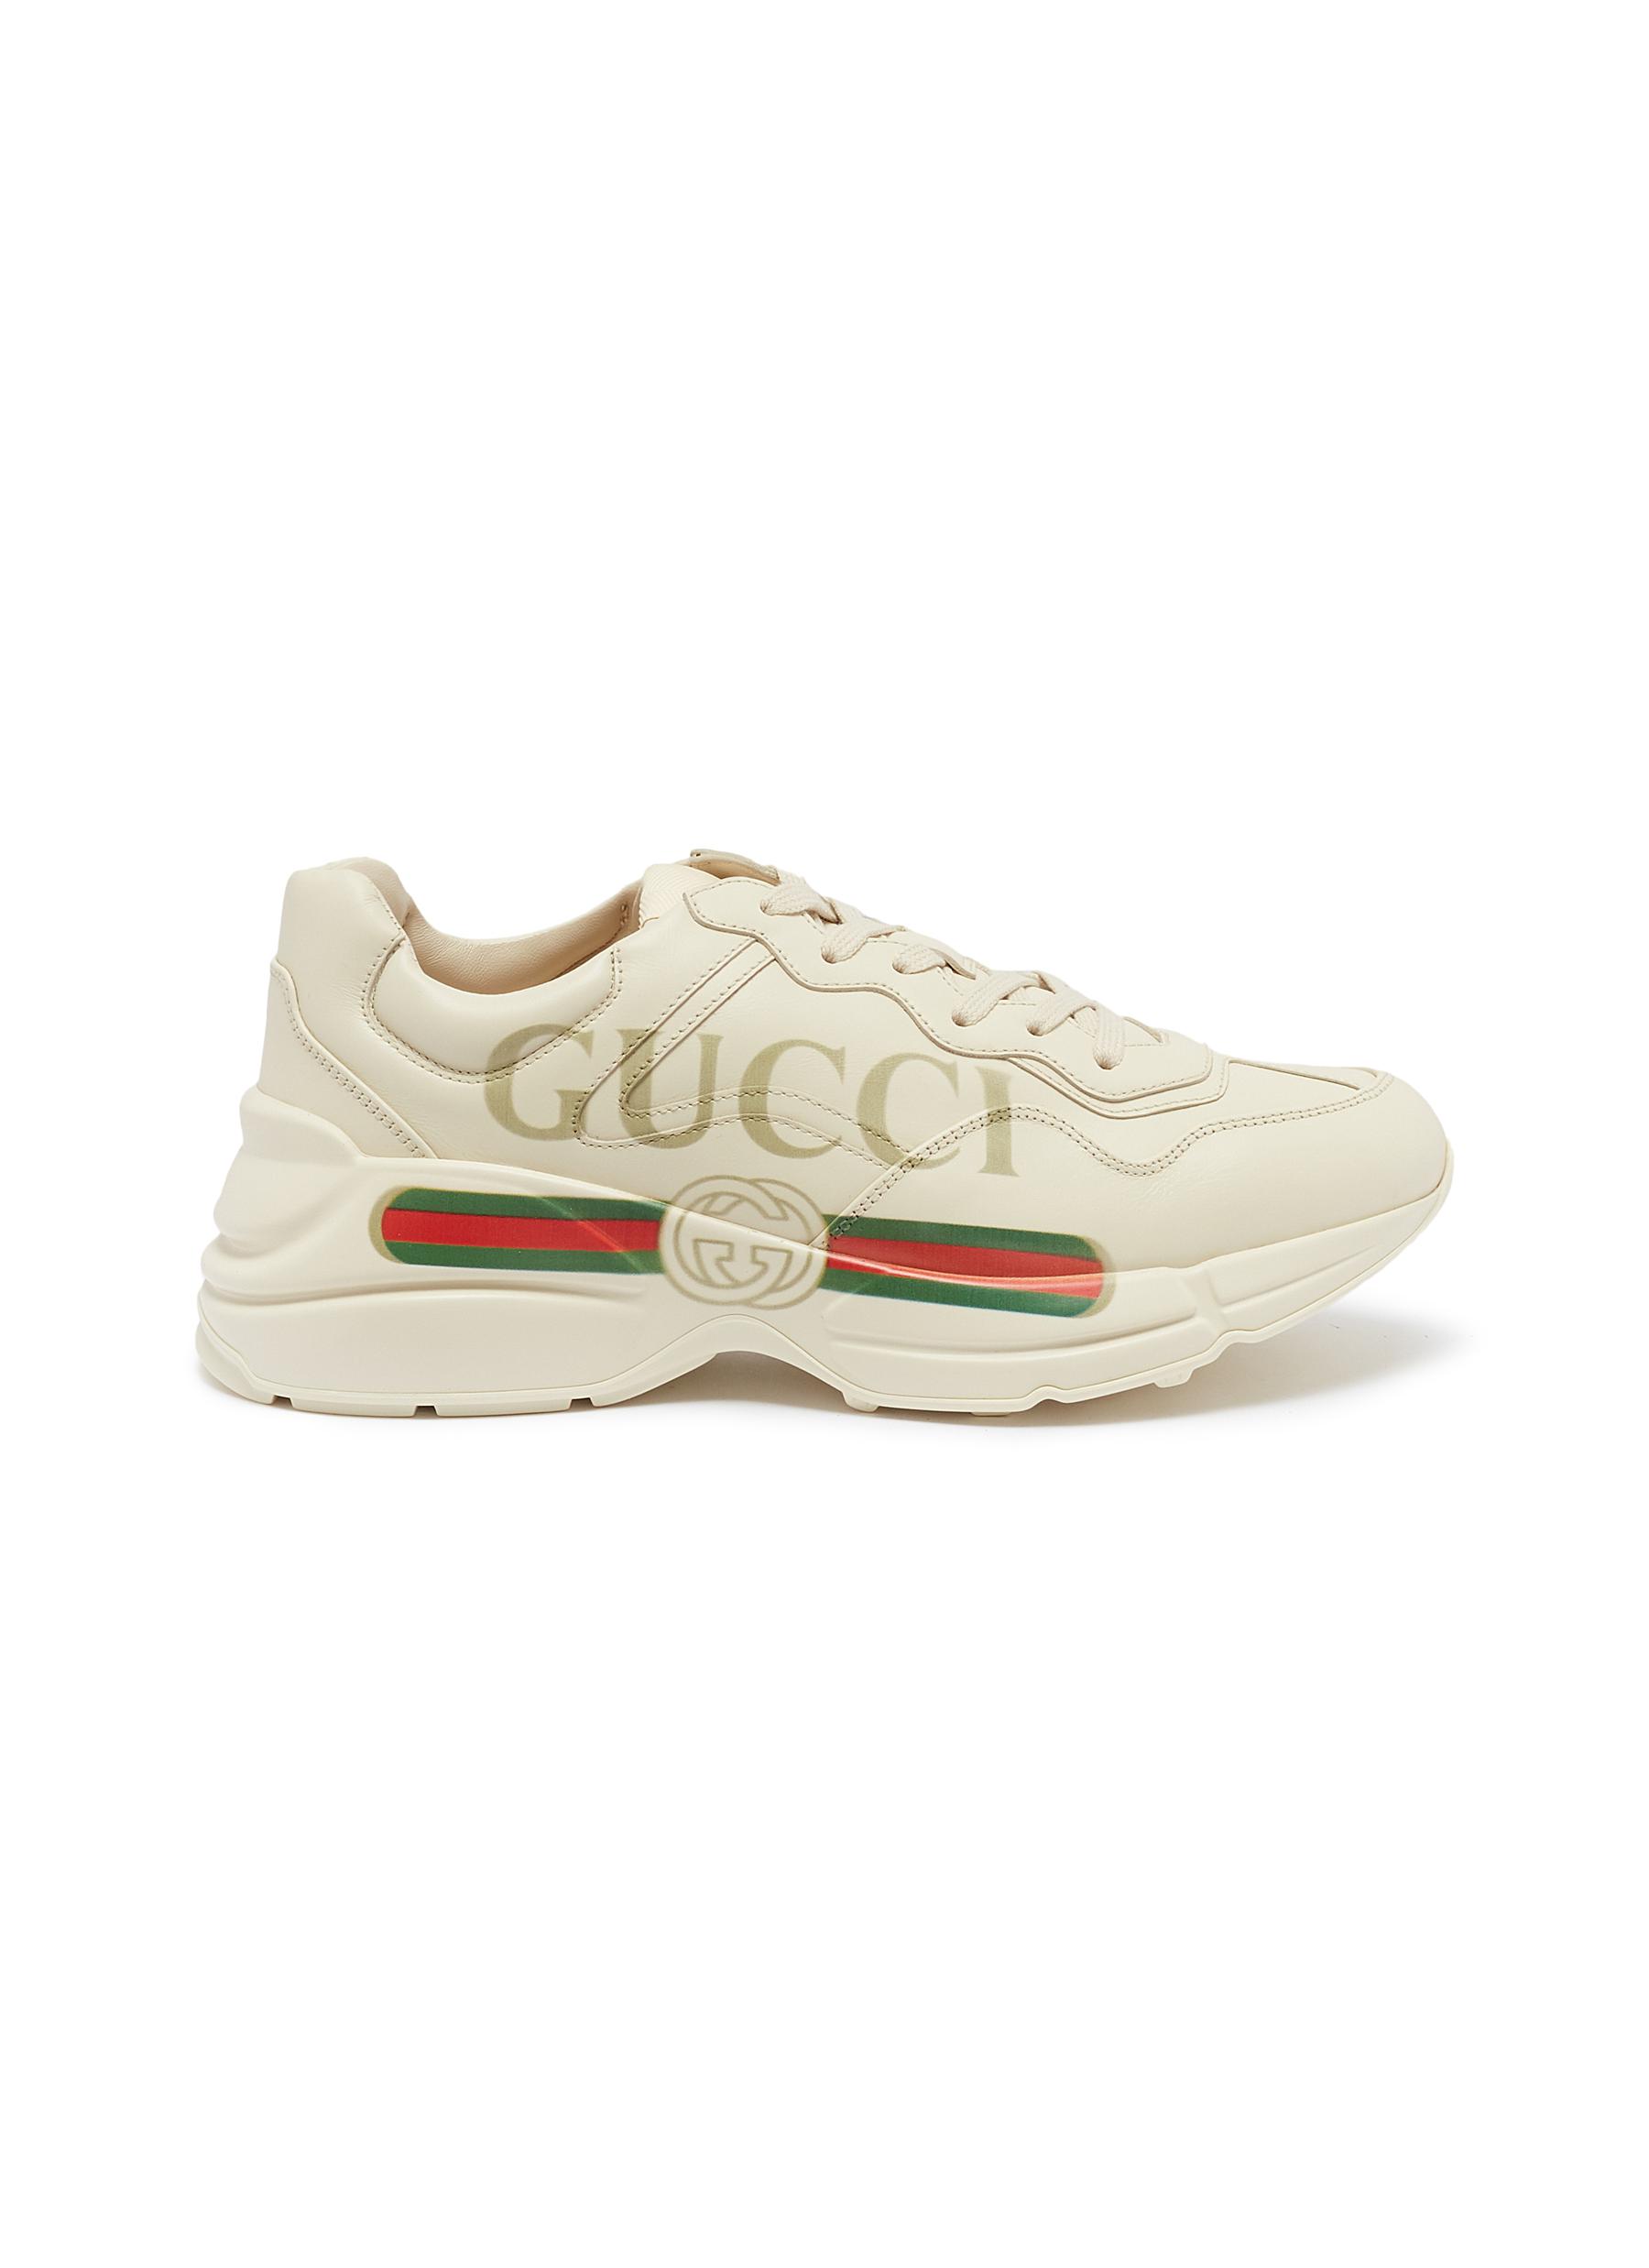 Gucci 'rhyton' Logo Print Leather Sneakers | ModeSens